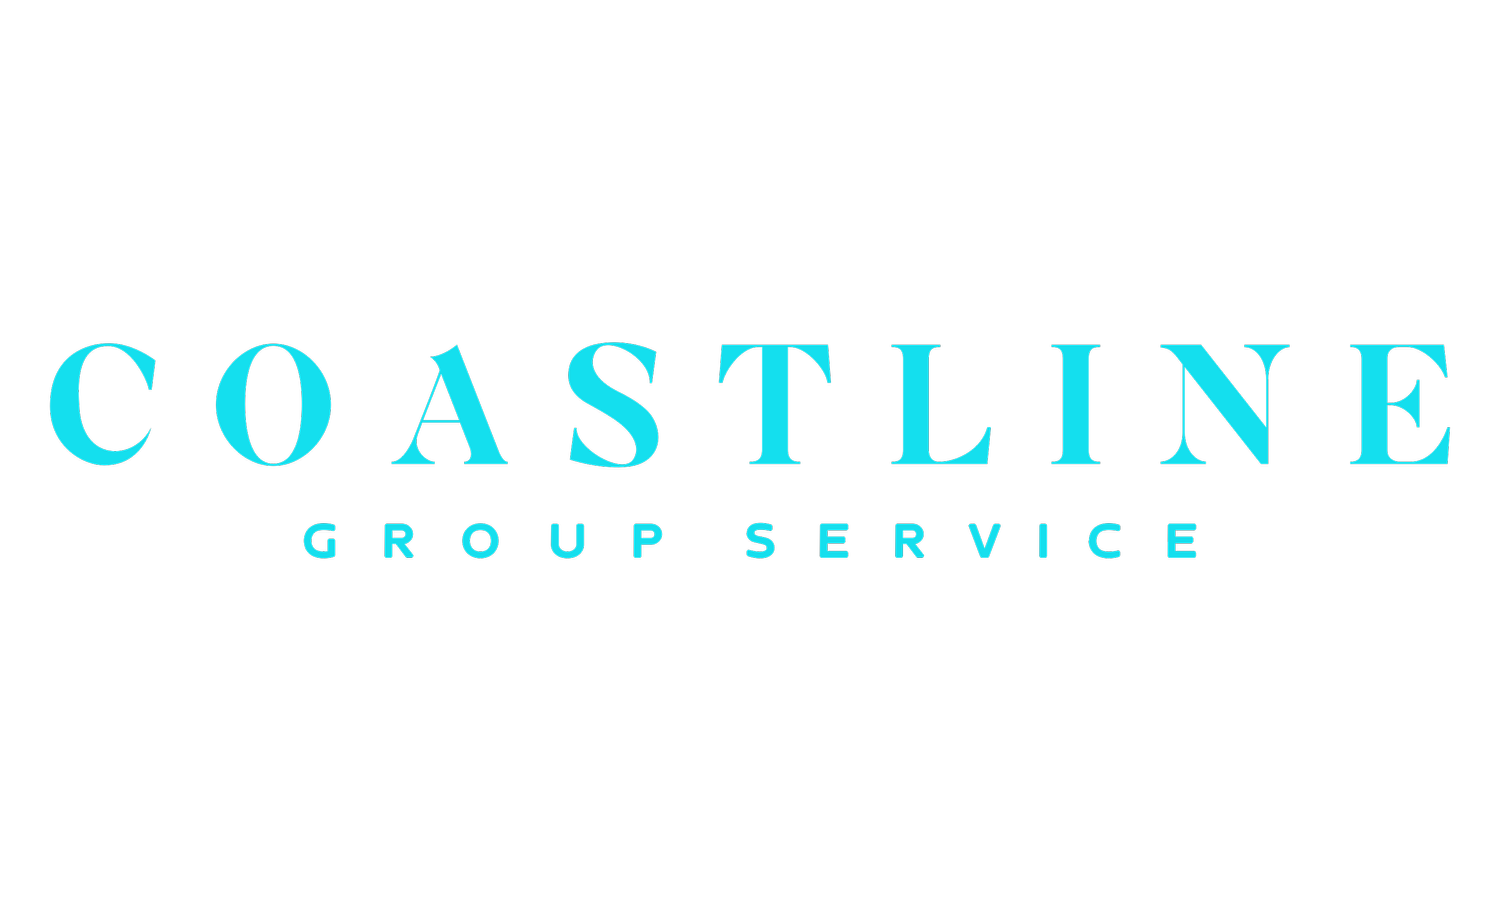 Coastline Group Service